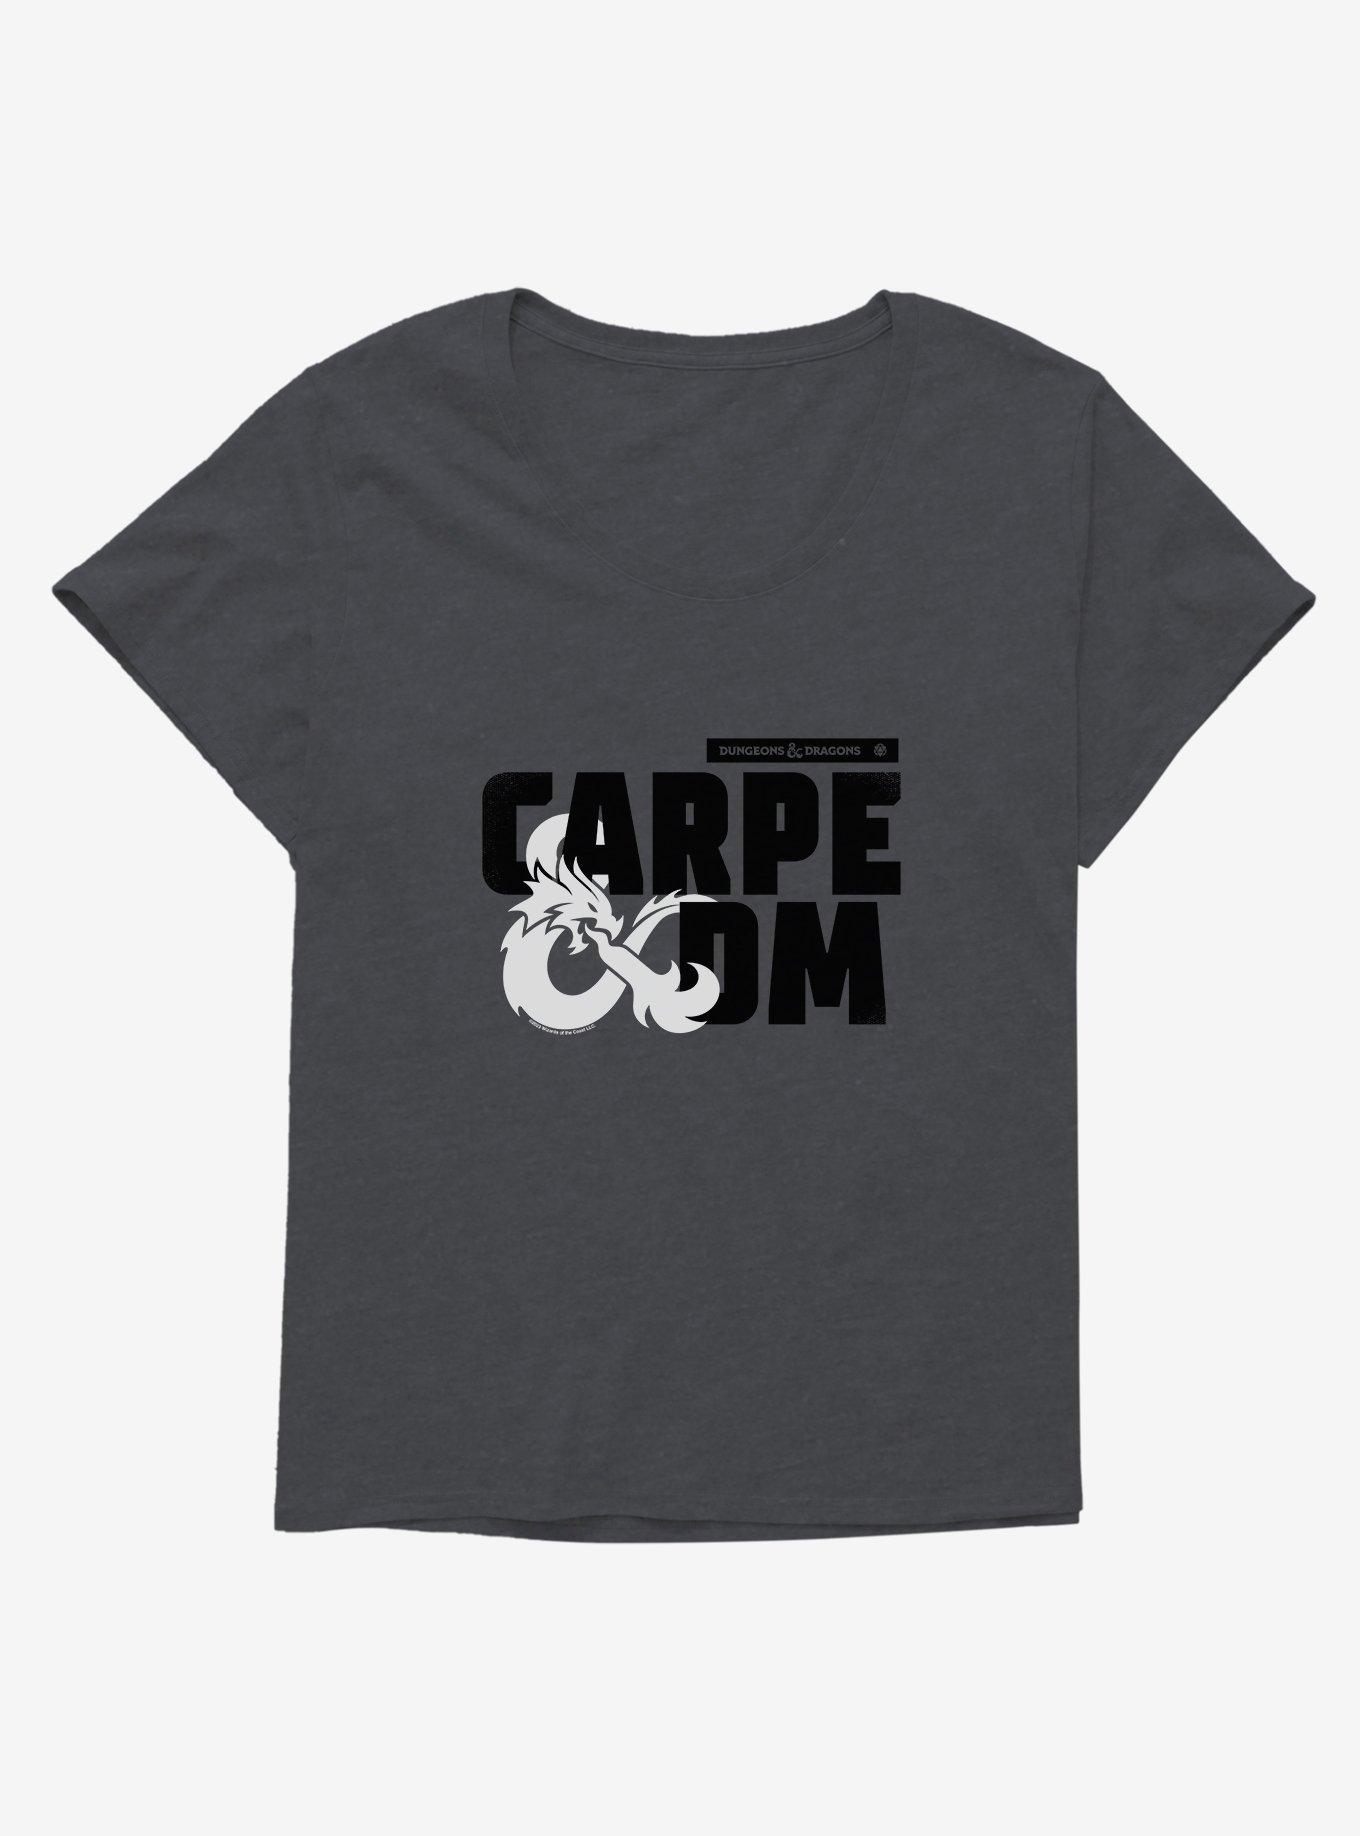 Carpe DM T-Shirt, Dungeons and Dragons